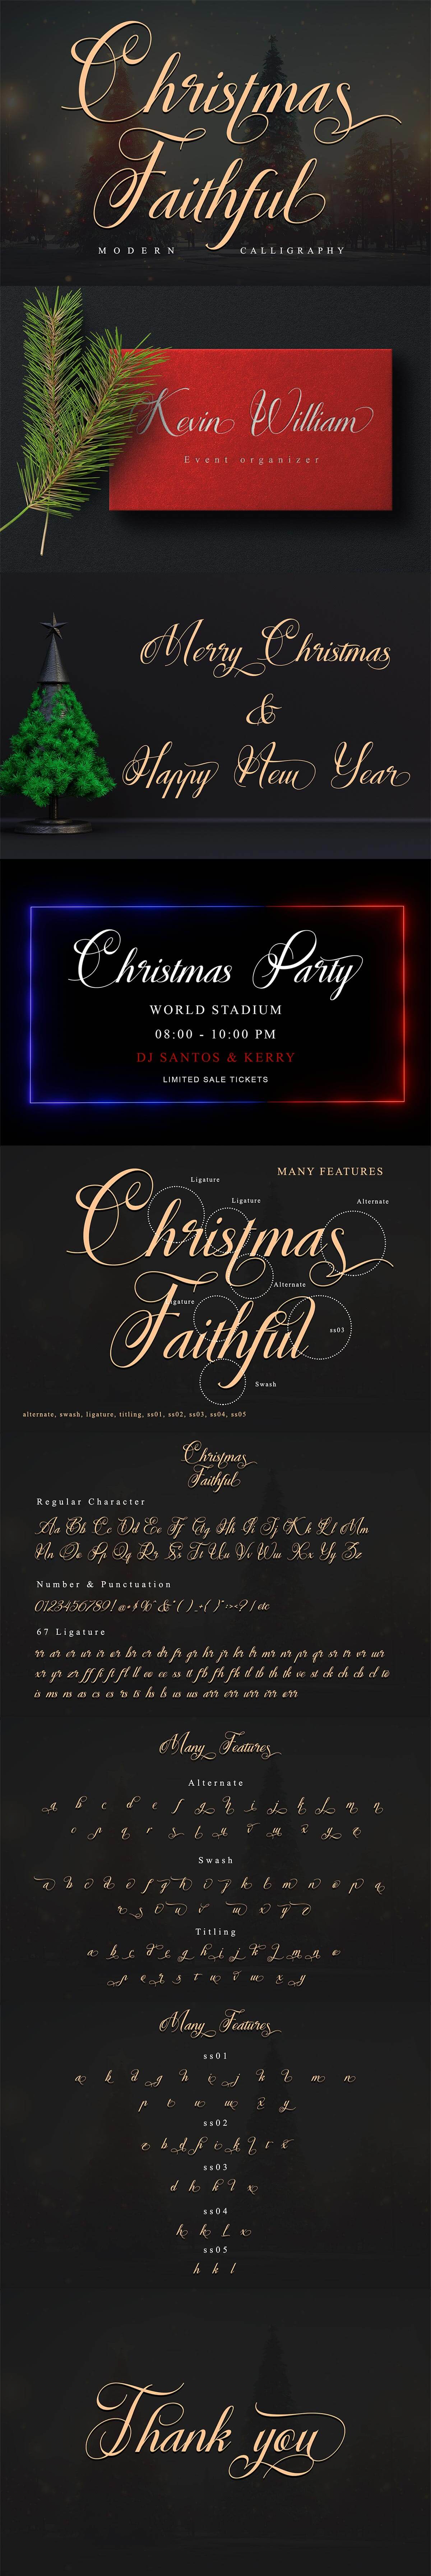 Christmas Faithful Calligraphy Font